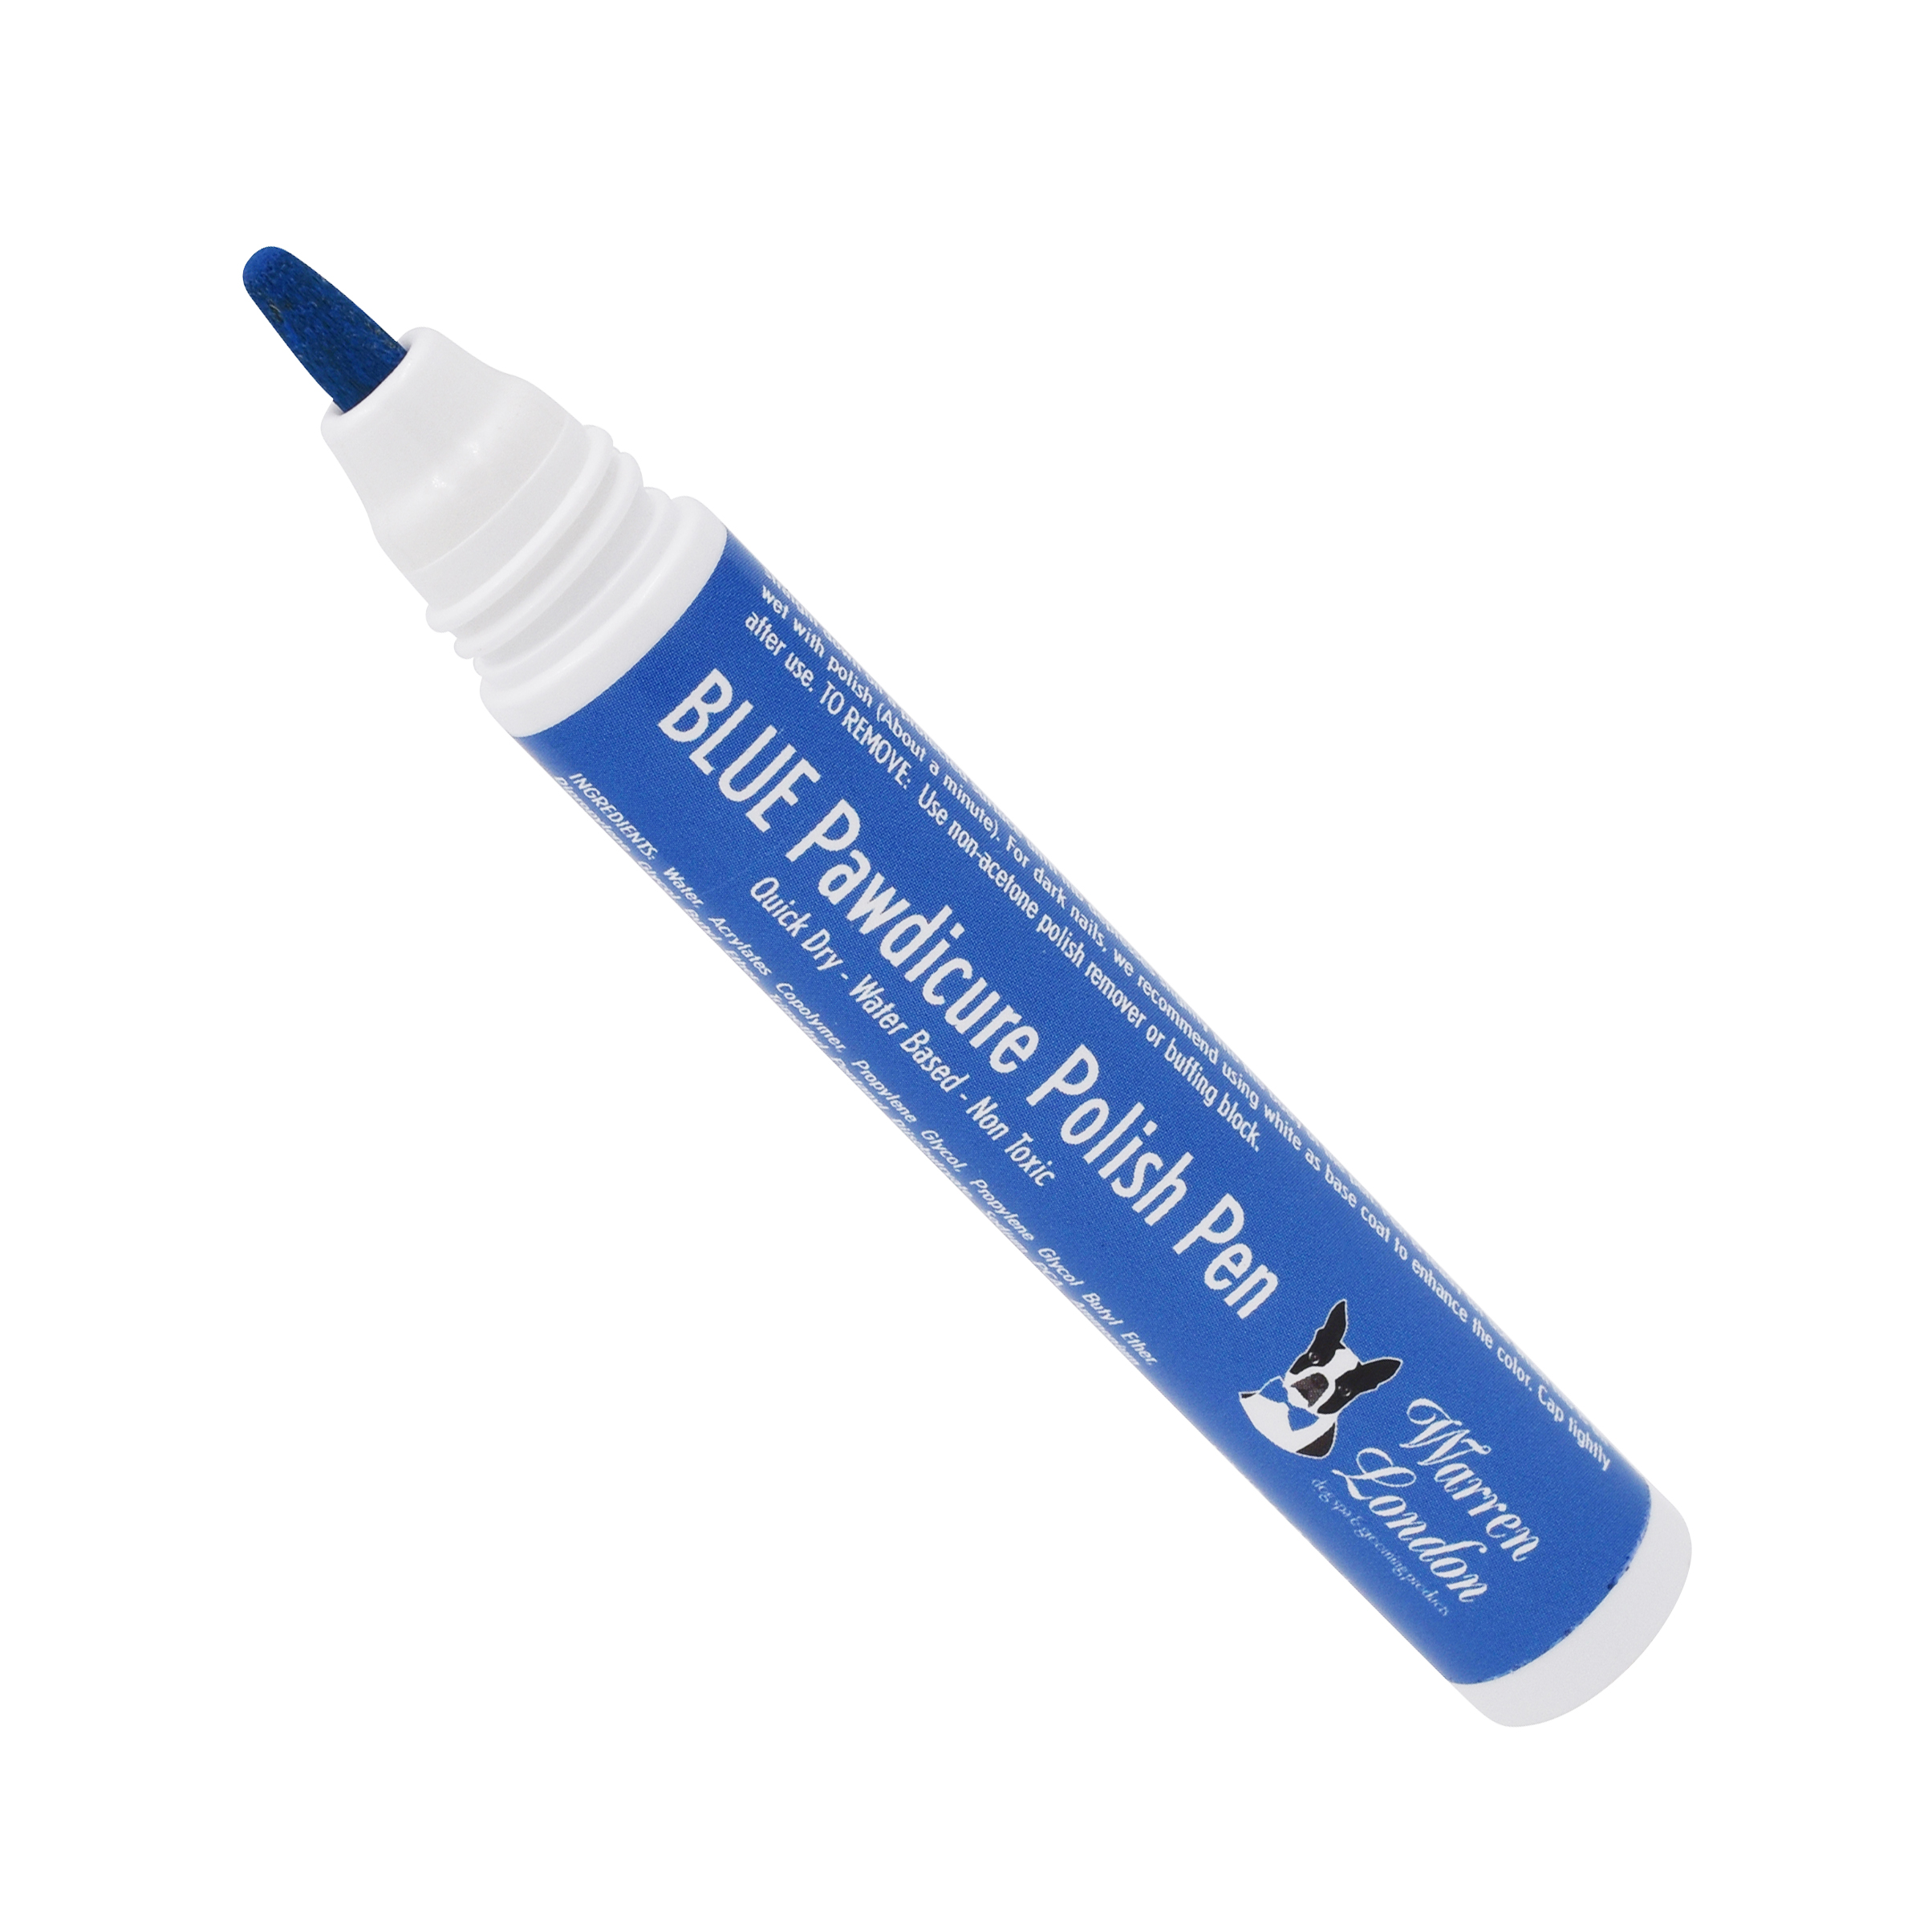 101602 0.16 Oz Pawdicure Dog Nail Polish Pen, Blue